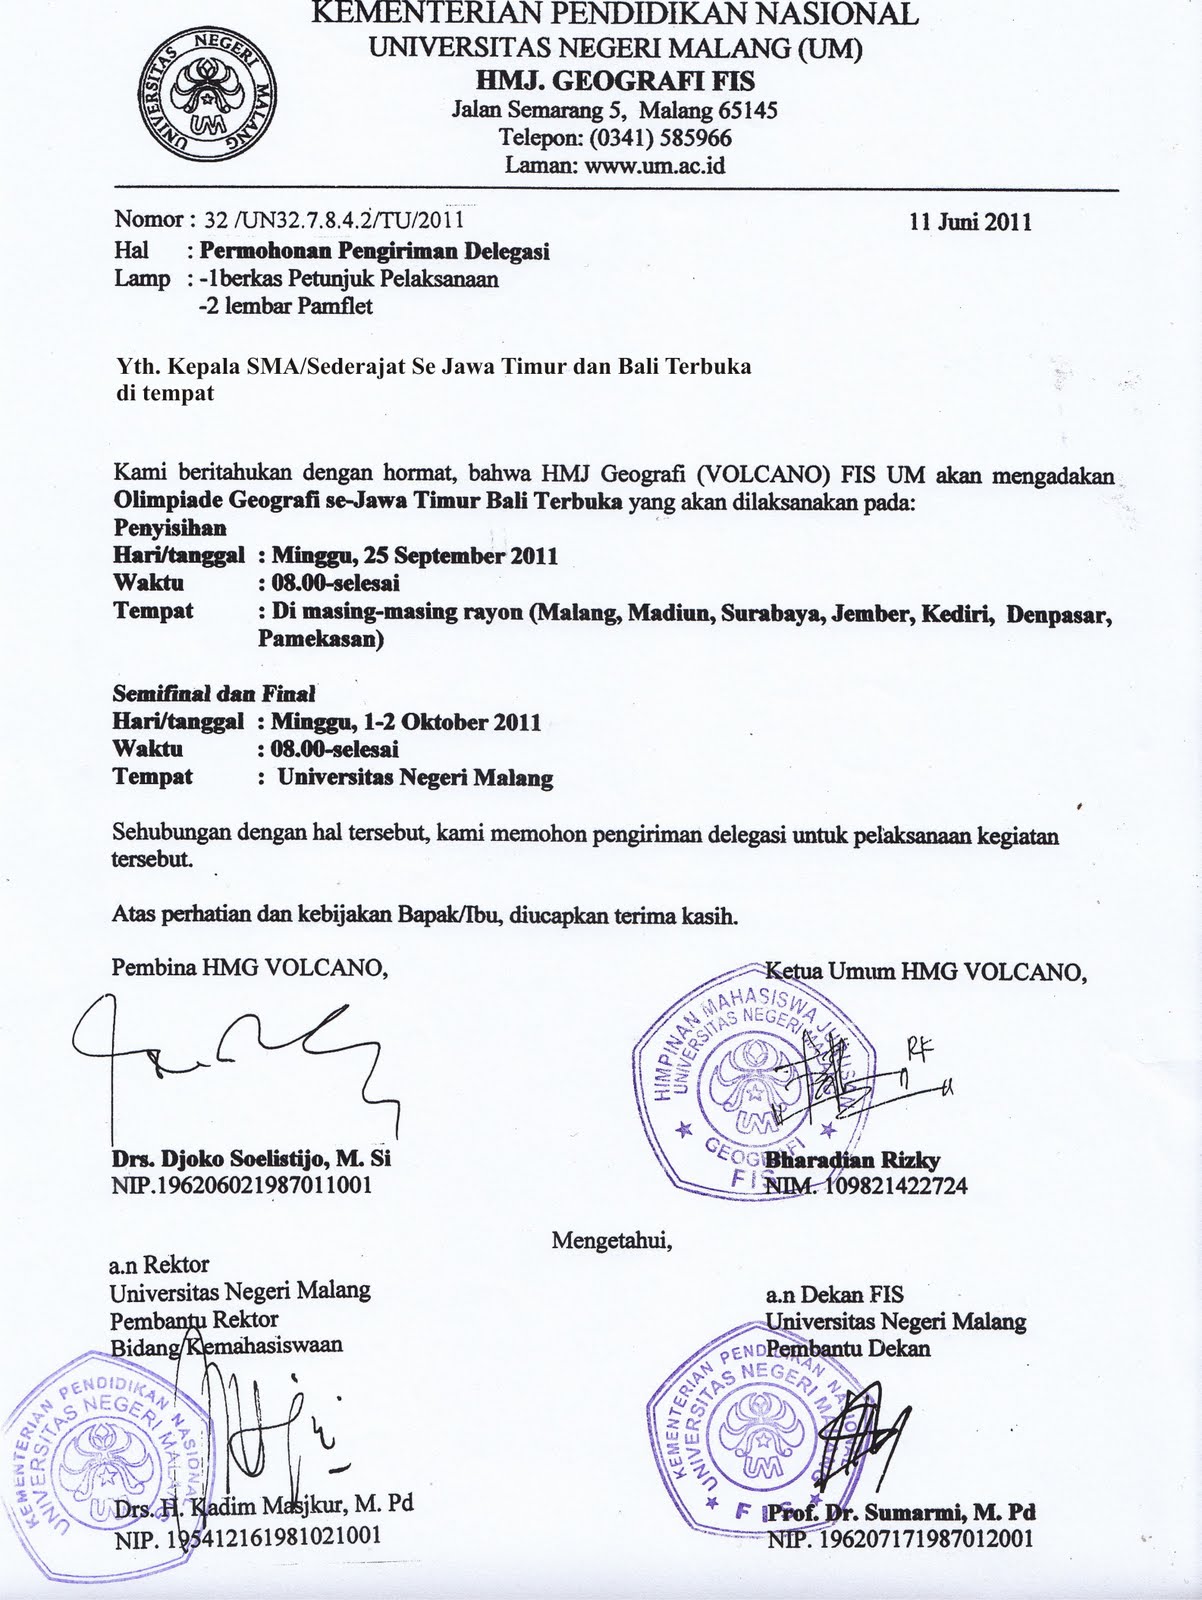 HMG Volcano Universitas Negeri Malang: Surat Undangan 